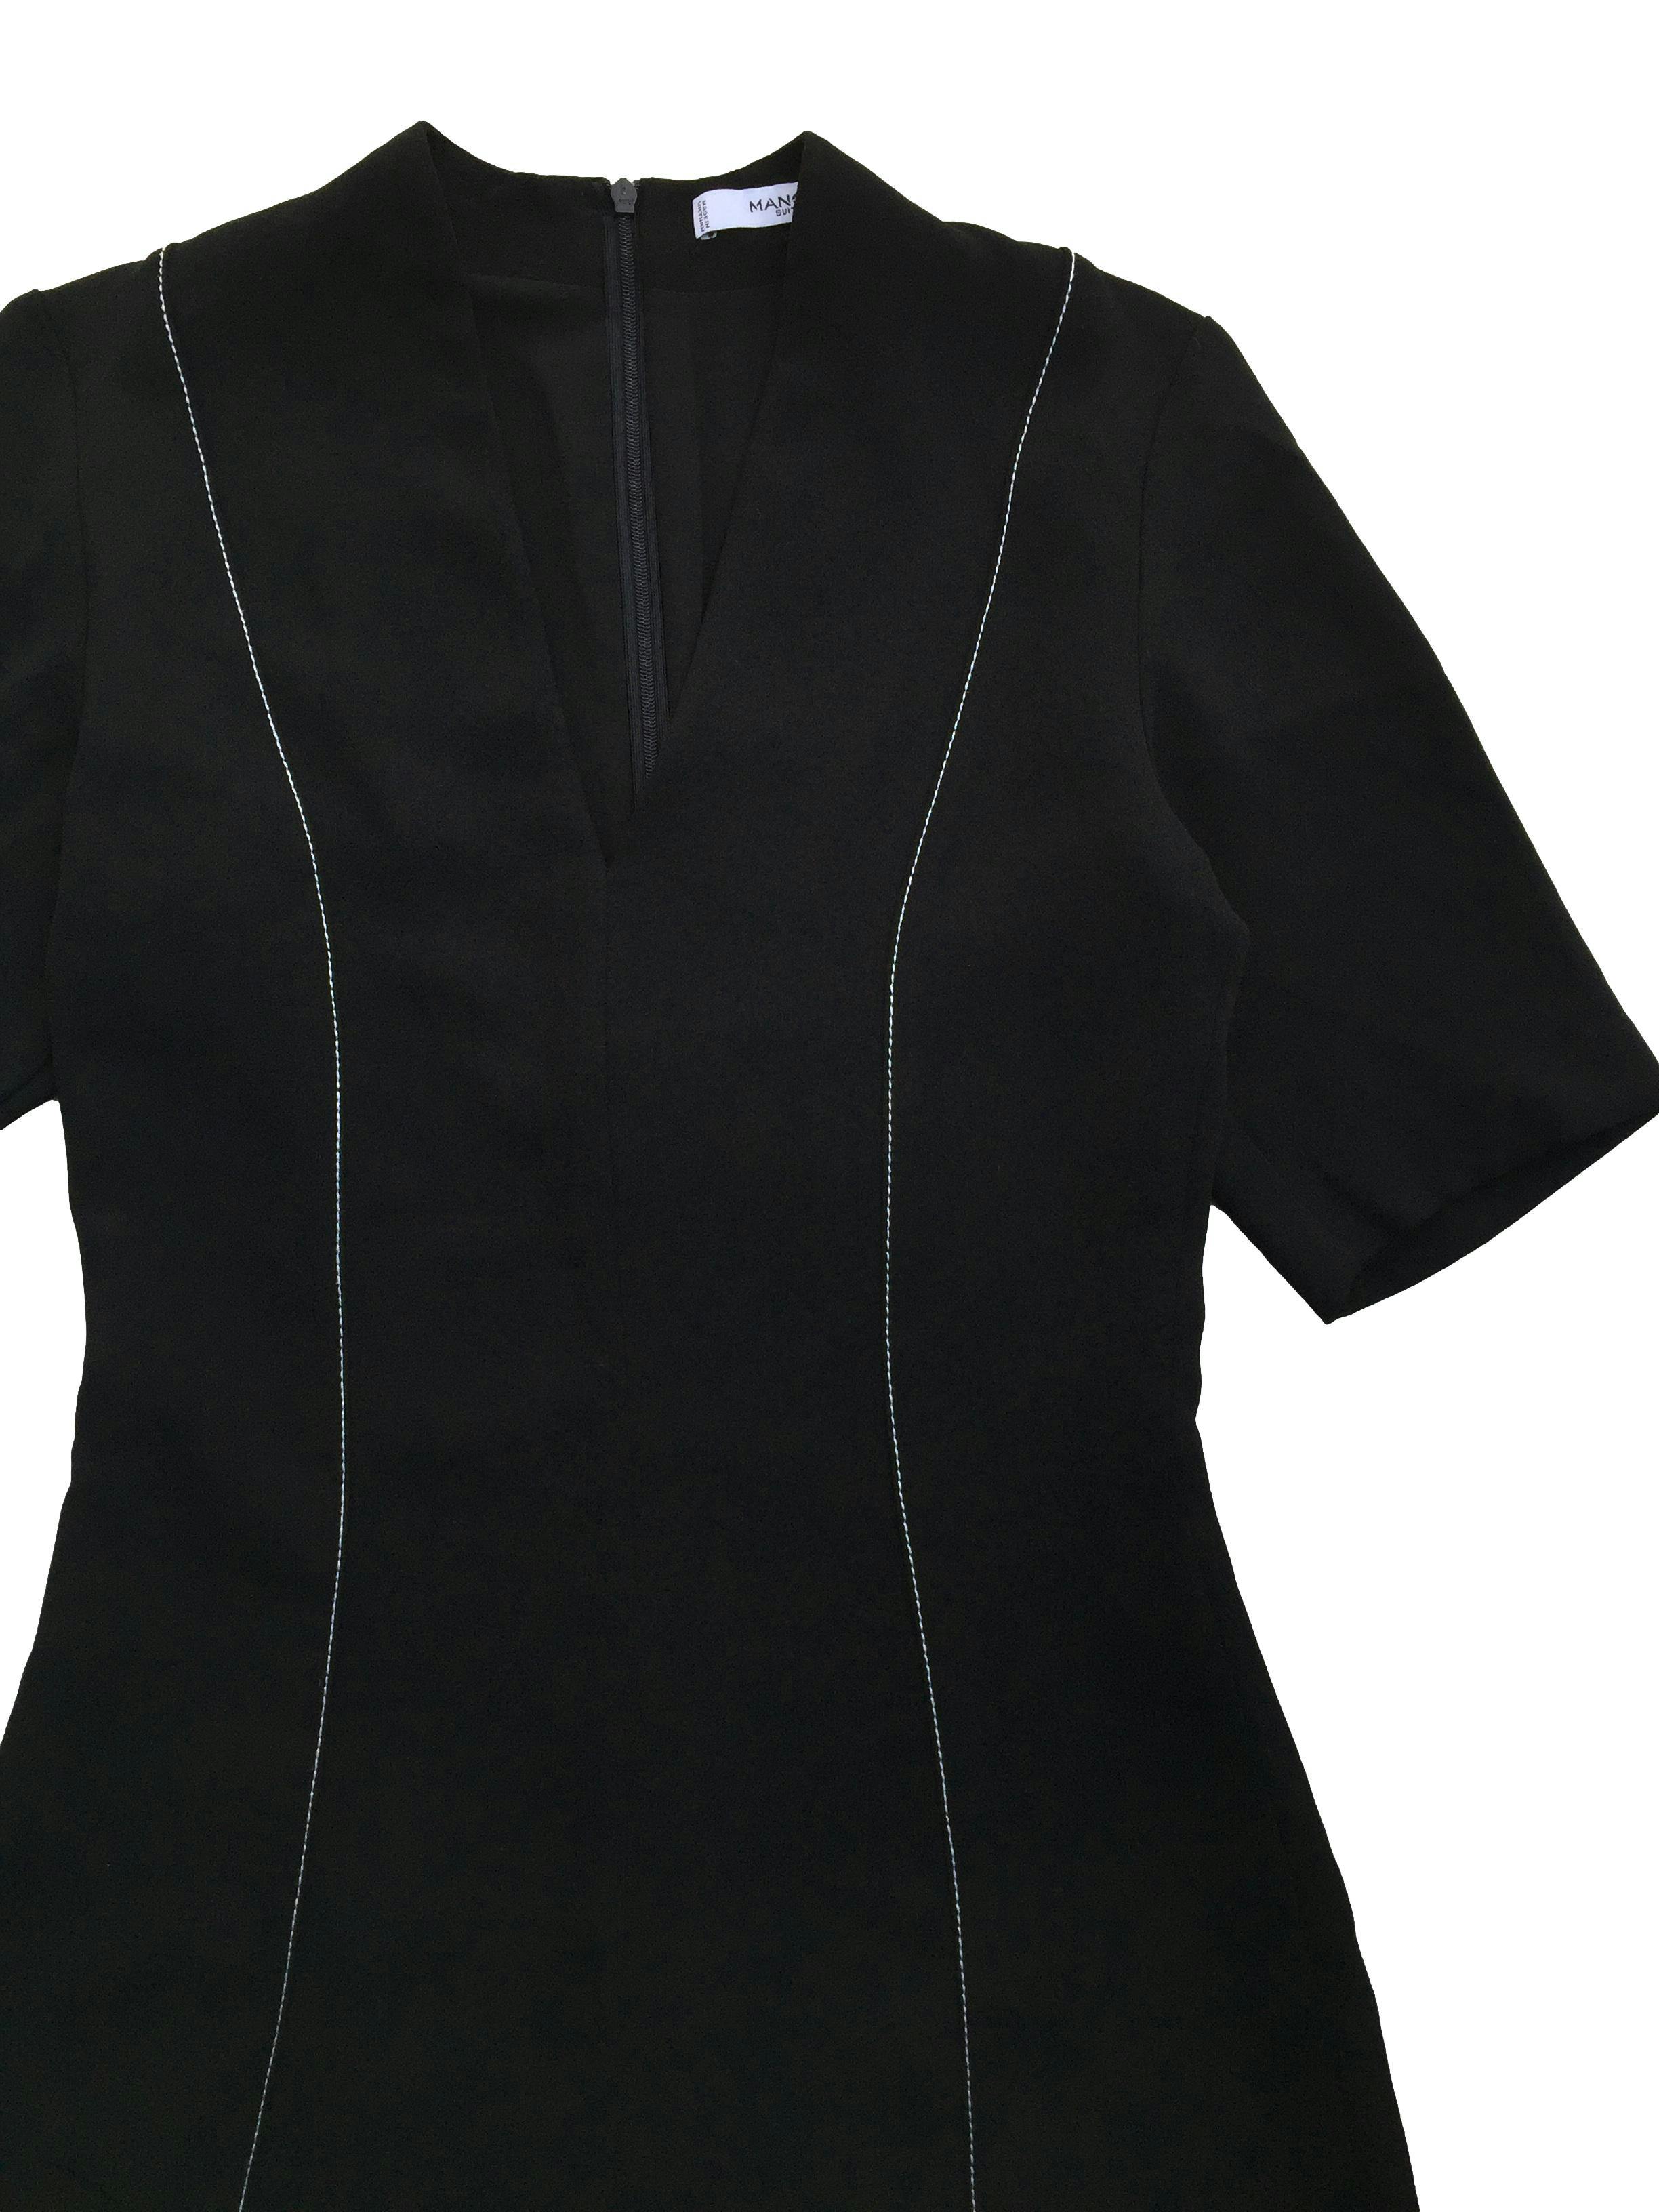 Vestido Mango negro, forro, cierre posterior, abertura inferior delantera. Busto: 82cm, Largo: 102cm